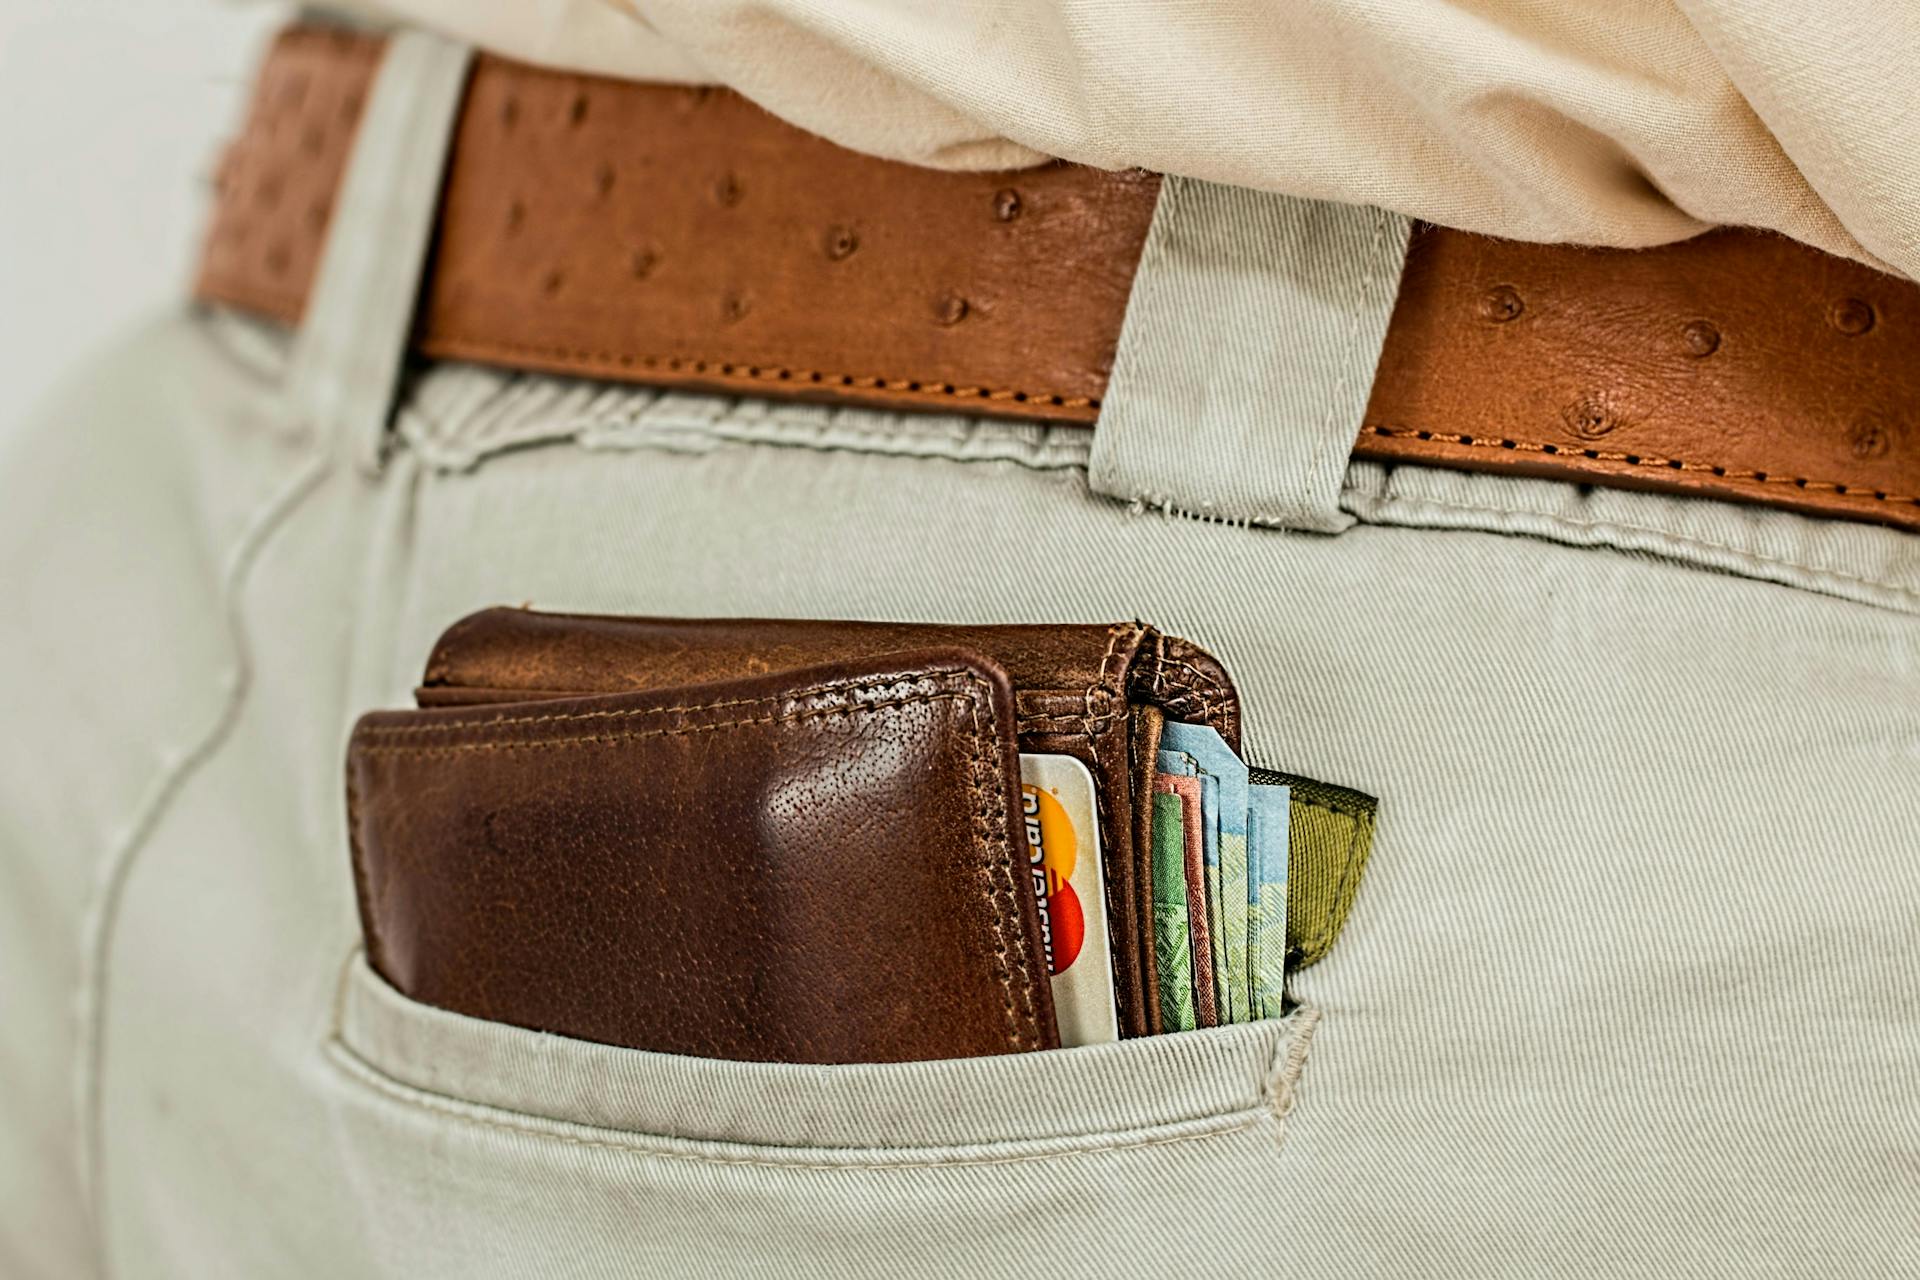 Wallet in a pocket. 